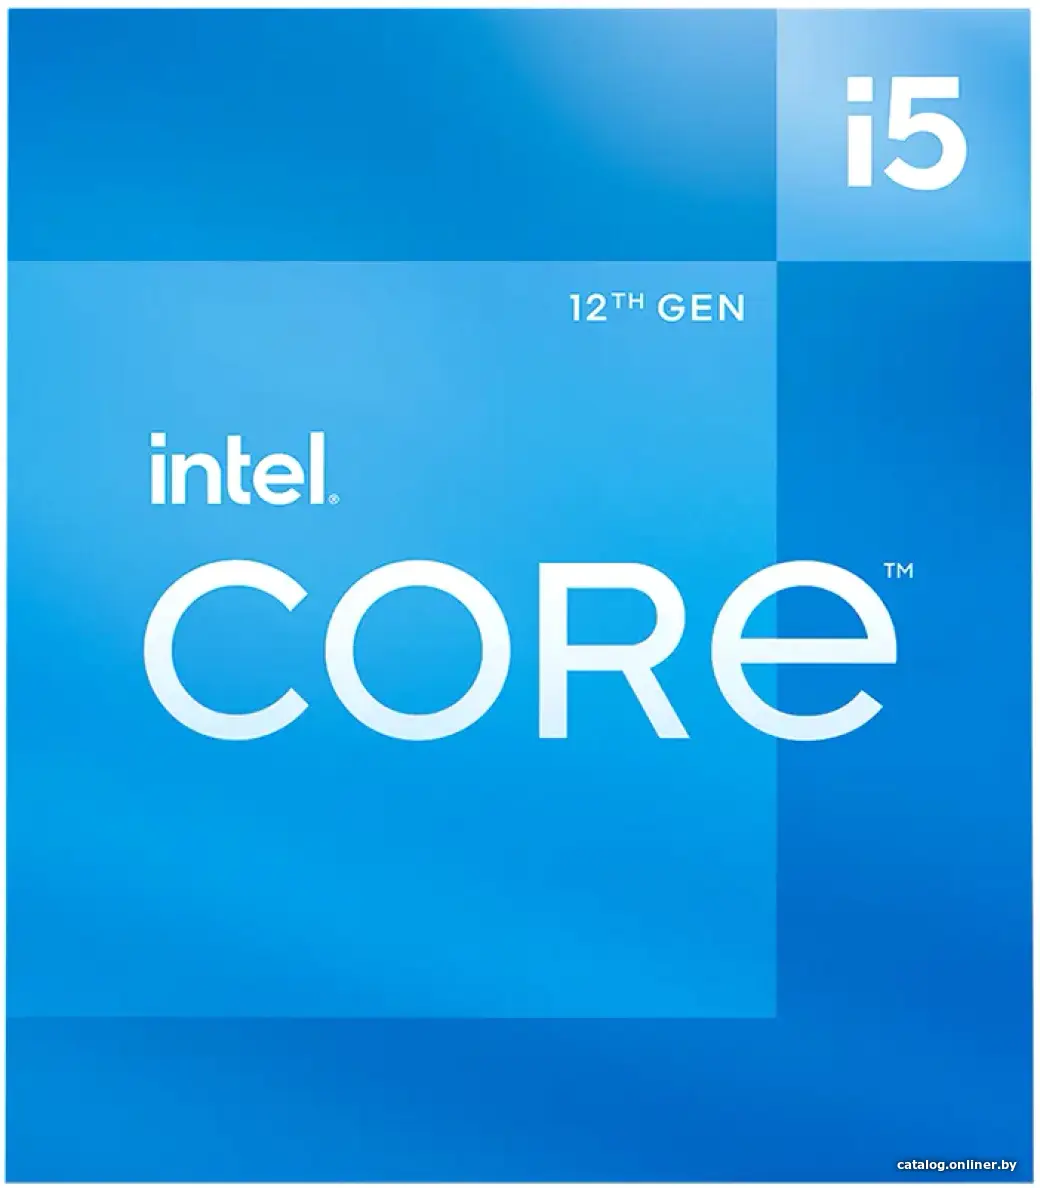 Купить Процессор Intel Core i5-12400, цена, опт и розница